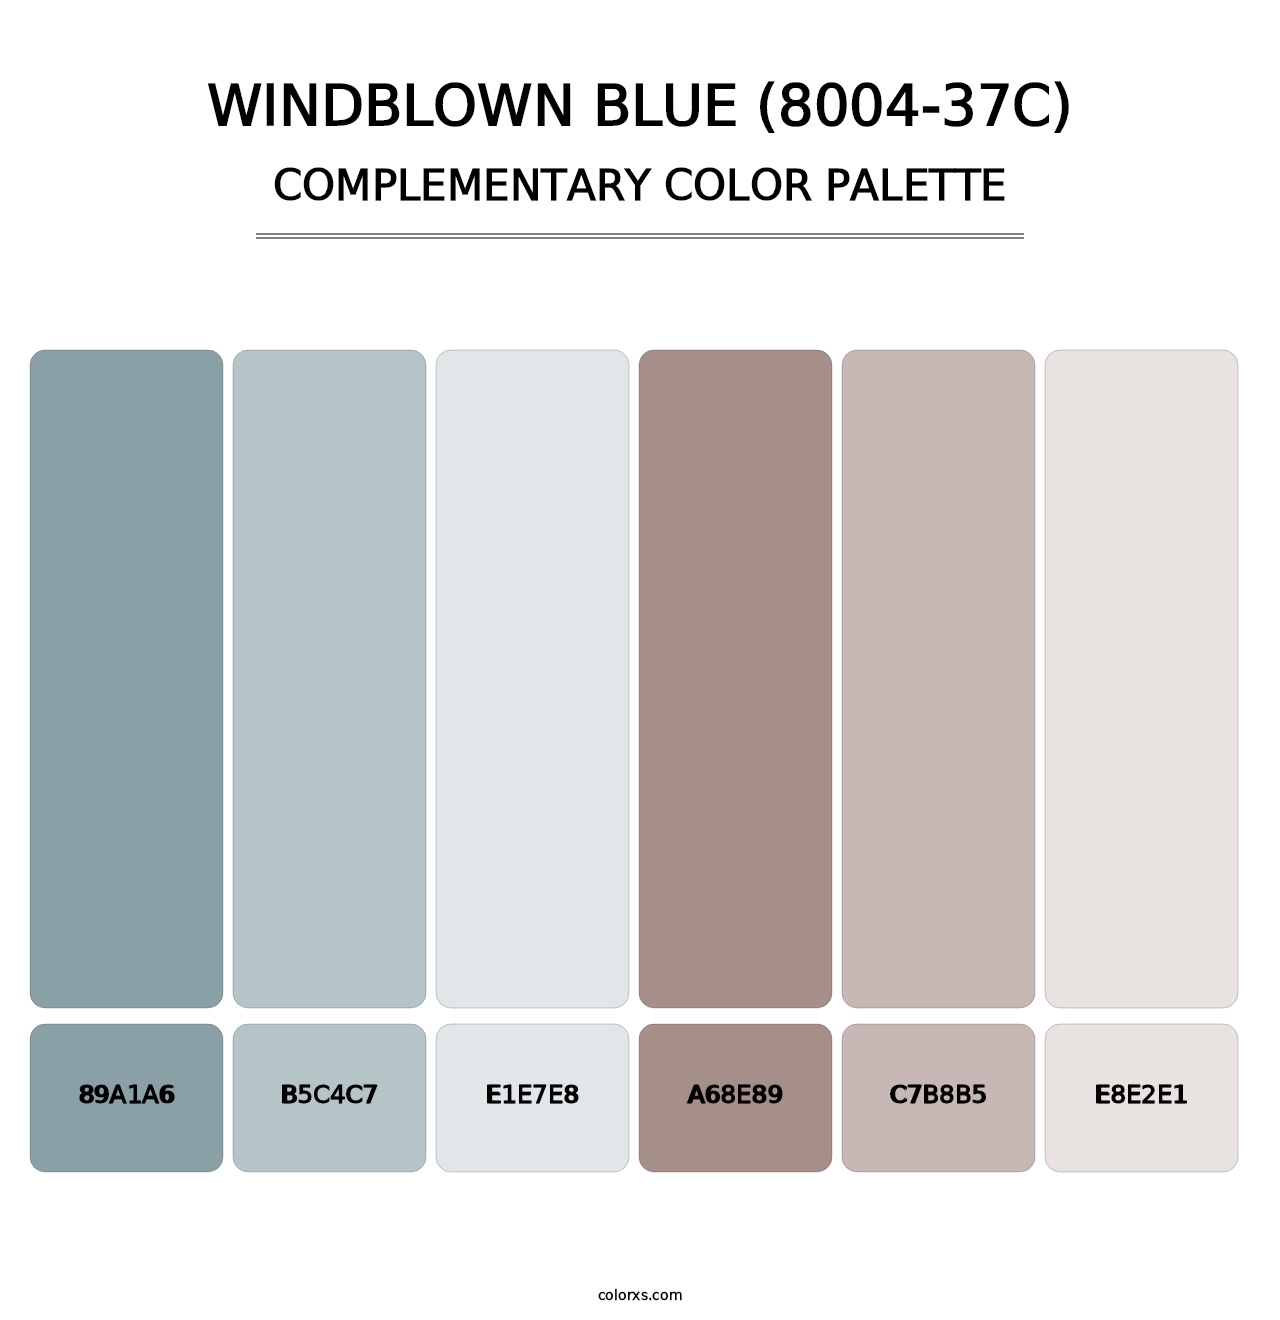 Windblown Blue (8004-37C) - Complementary Color Palette